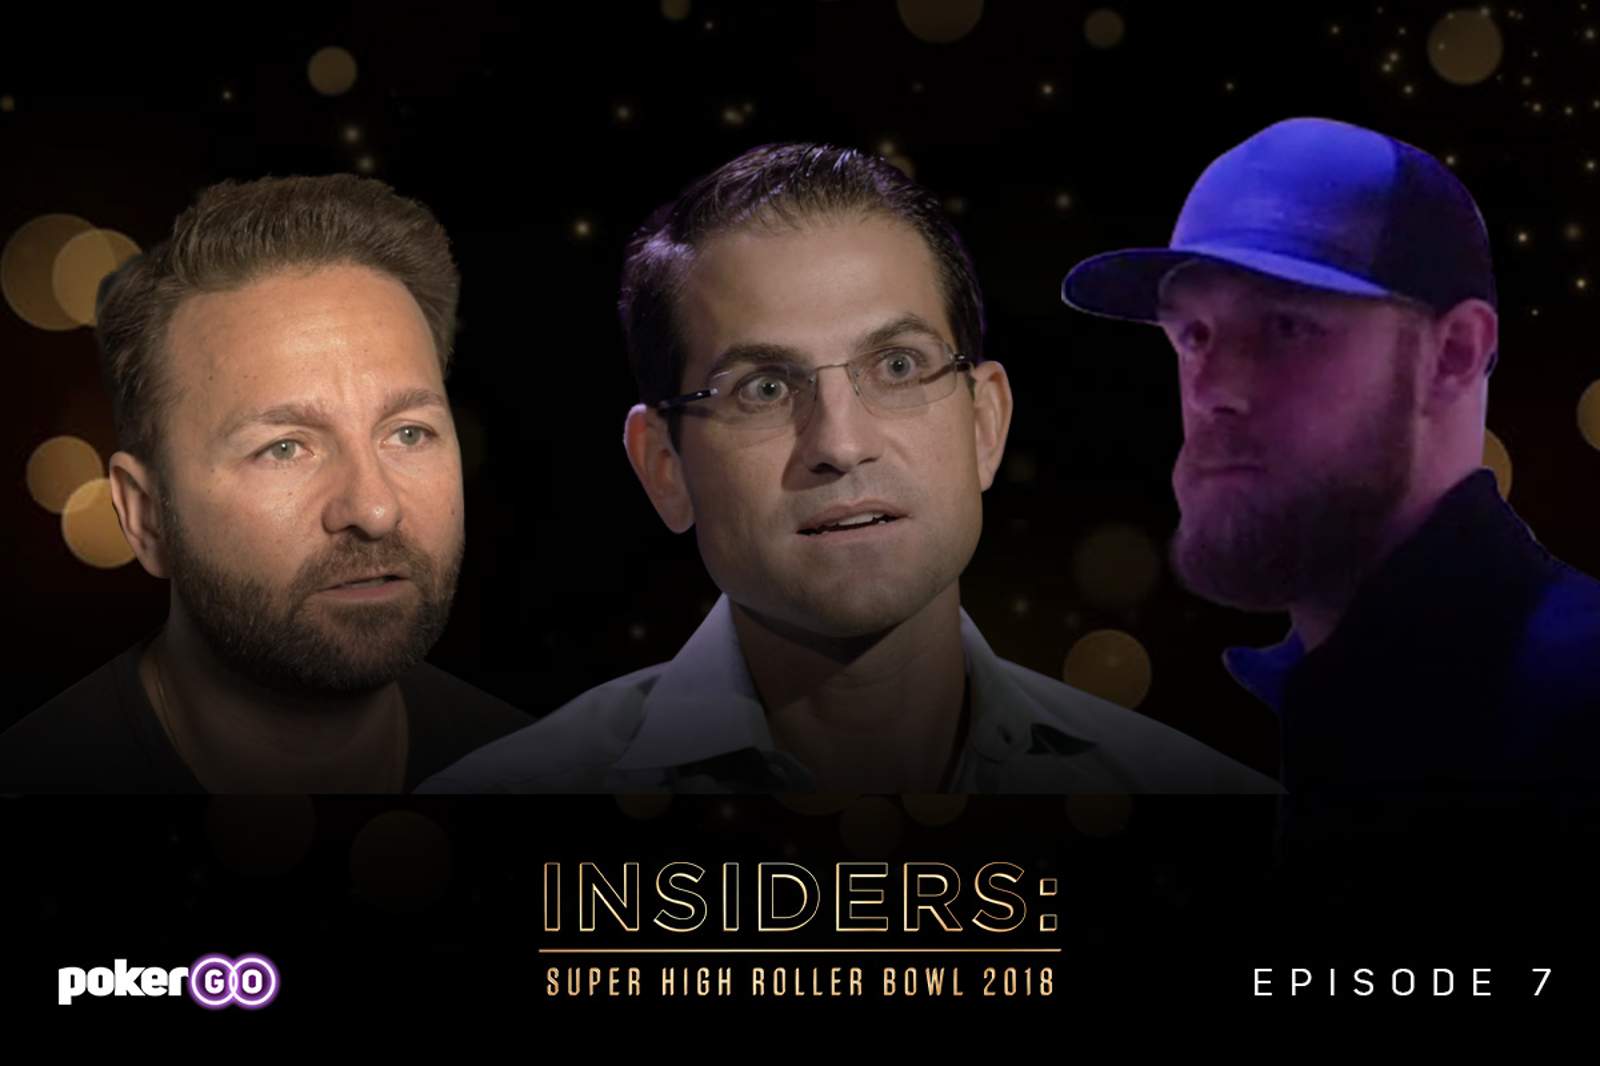 INSIDERS: The Super High Roller Bowl Post-Mortem is on PokerGO